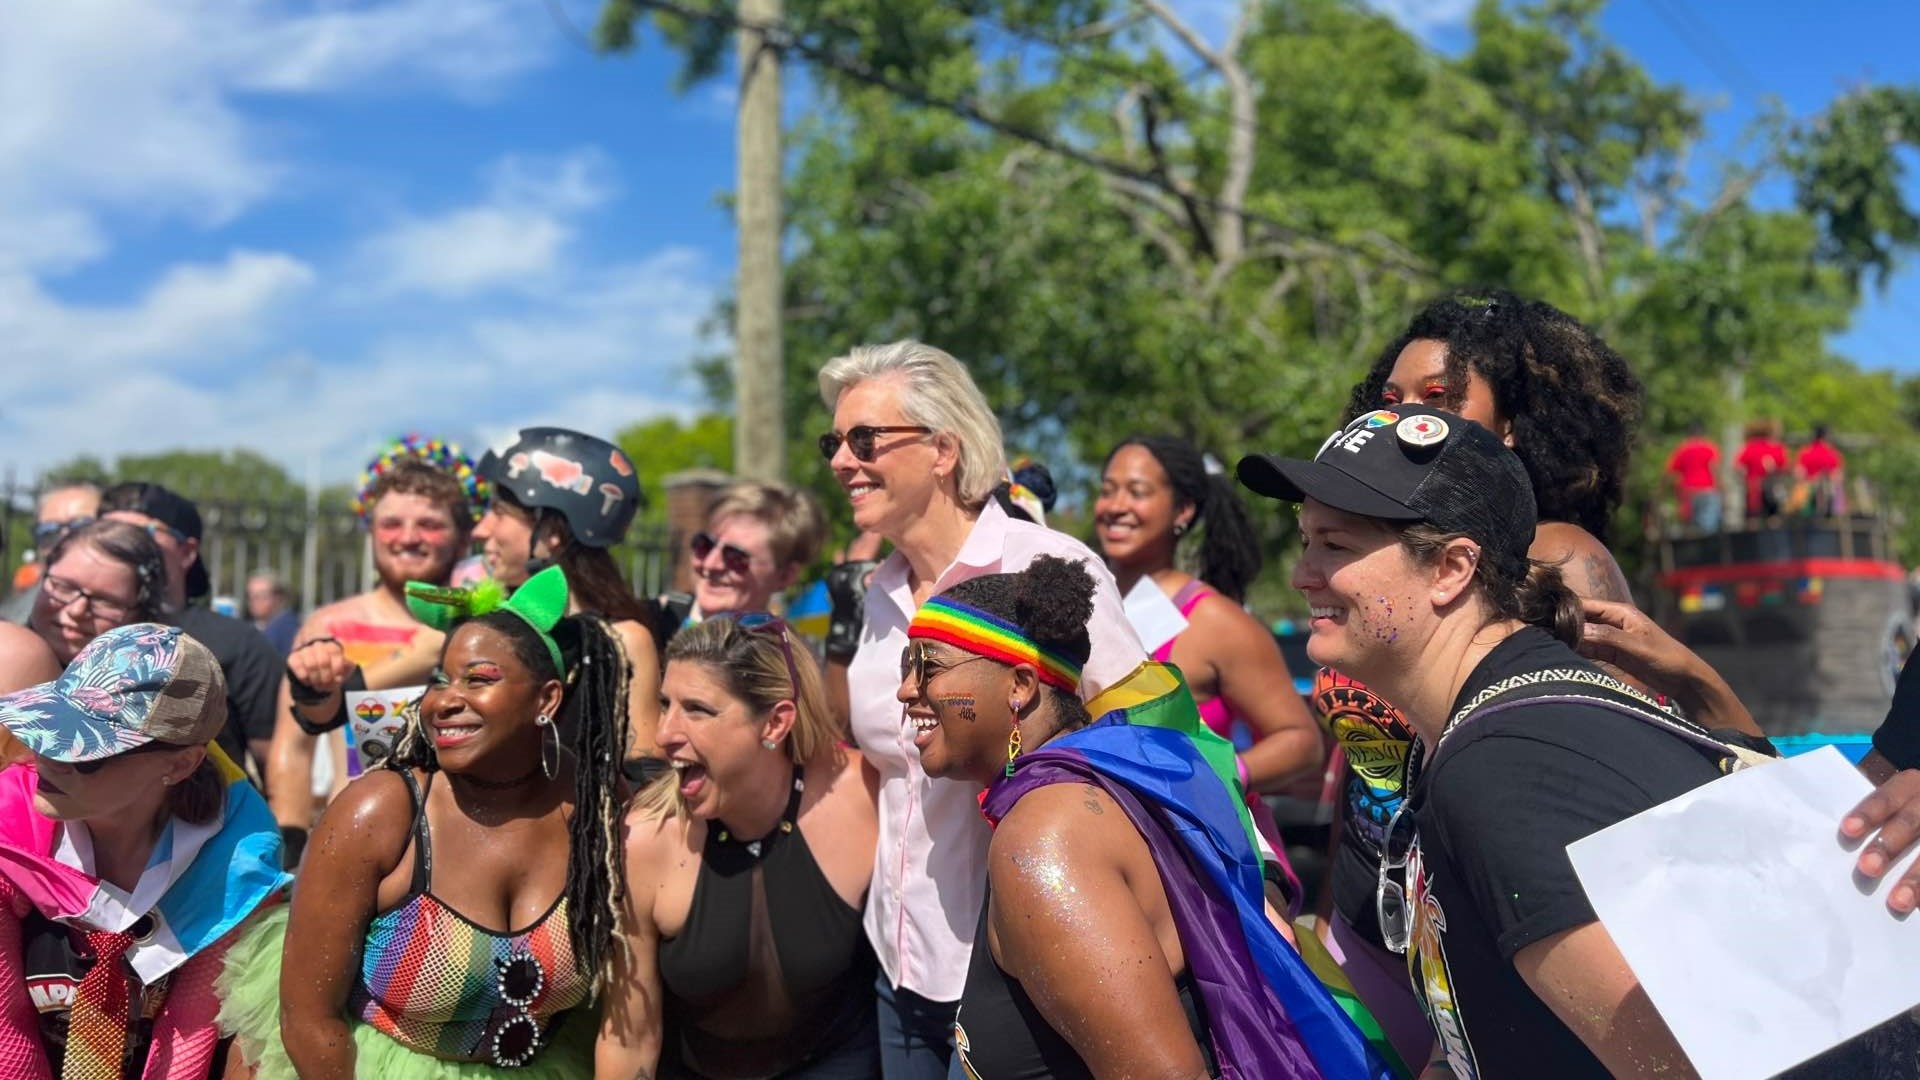 Tampa pride parade takes over despite proposed state legislation